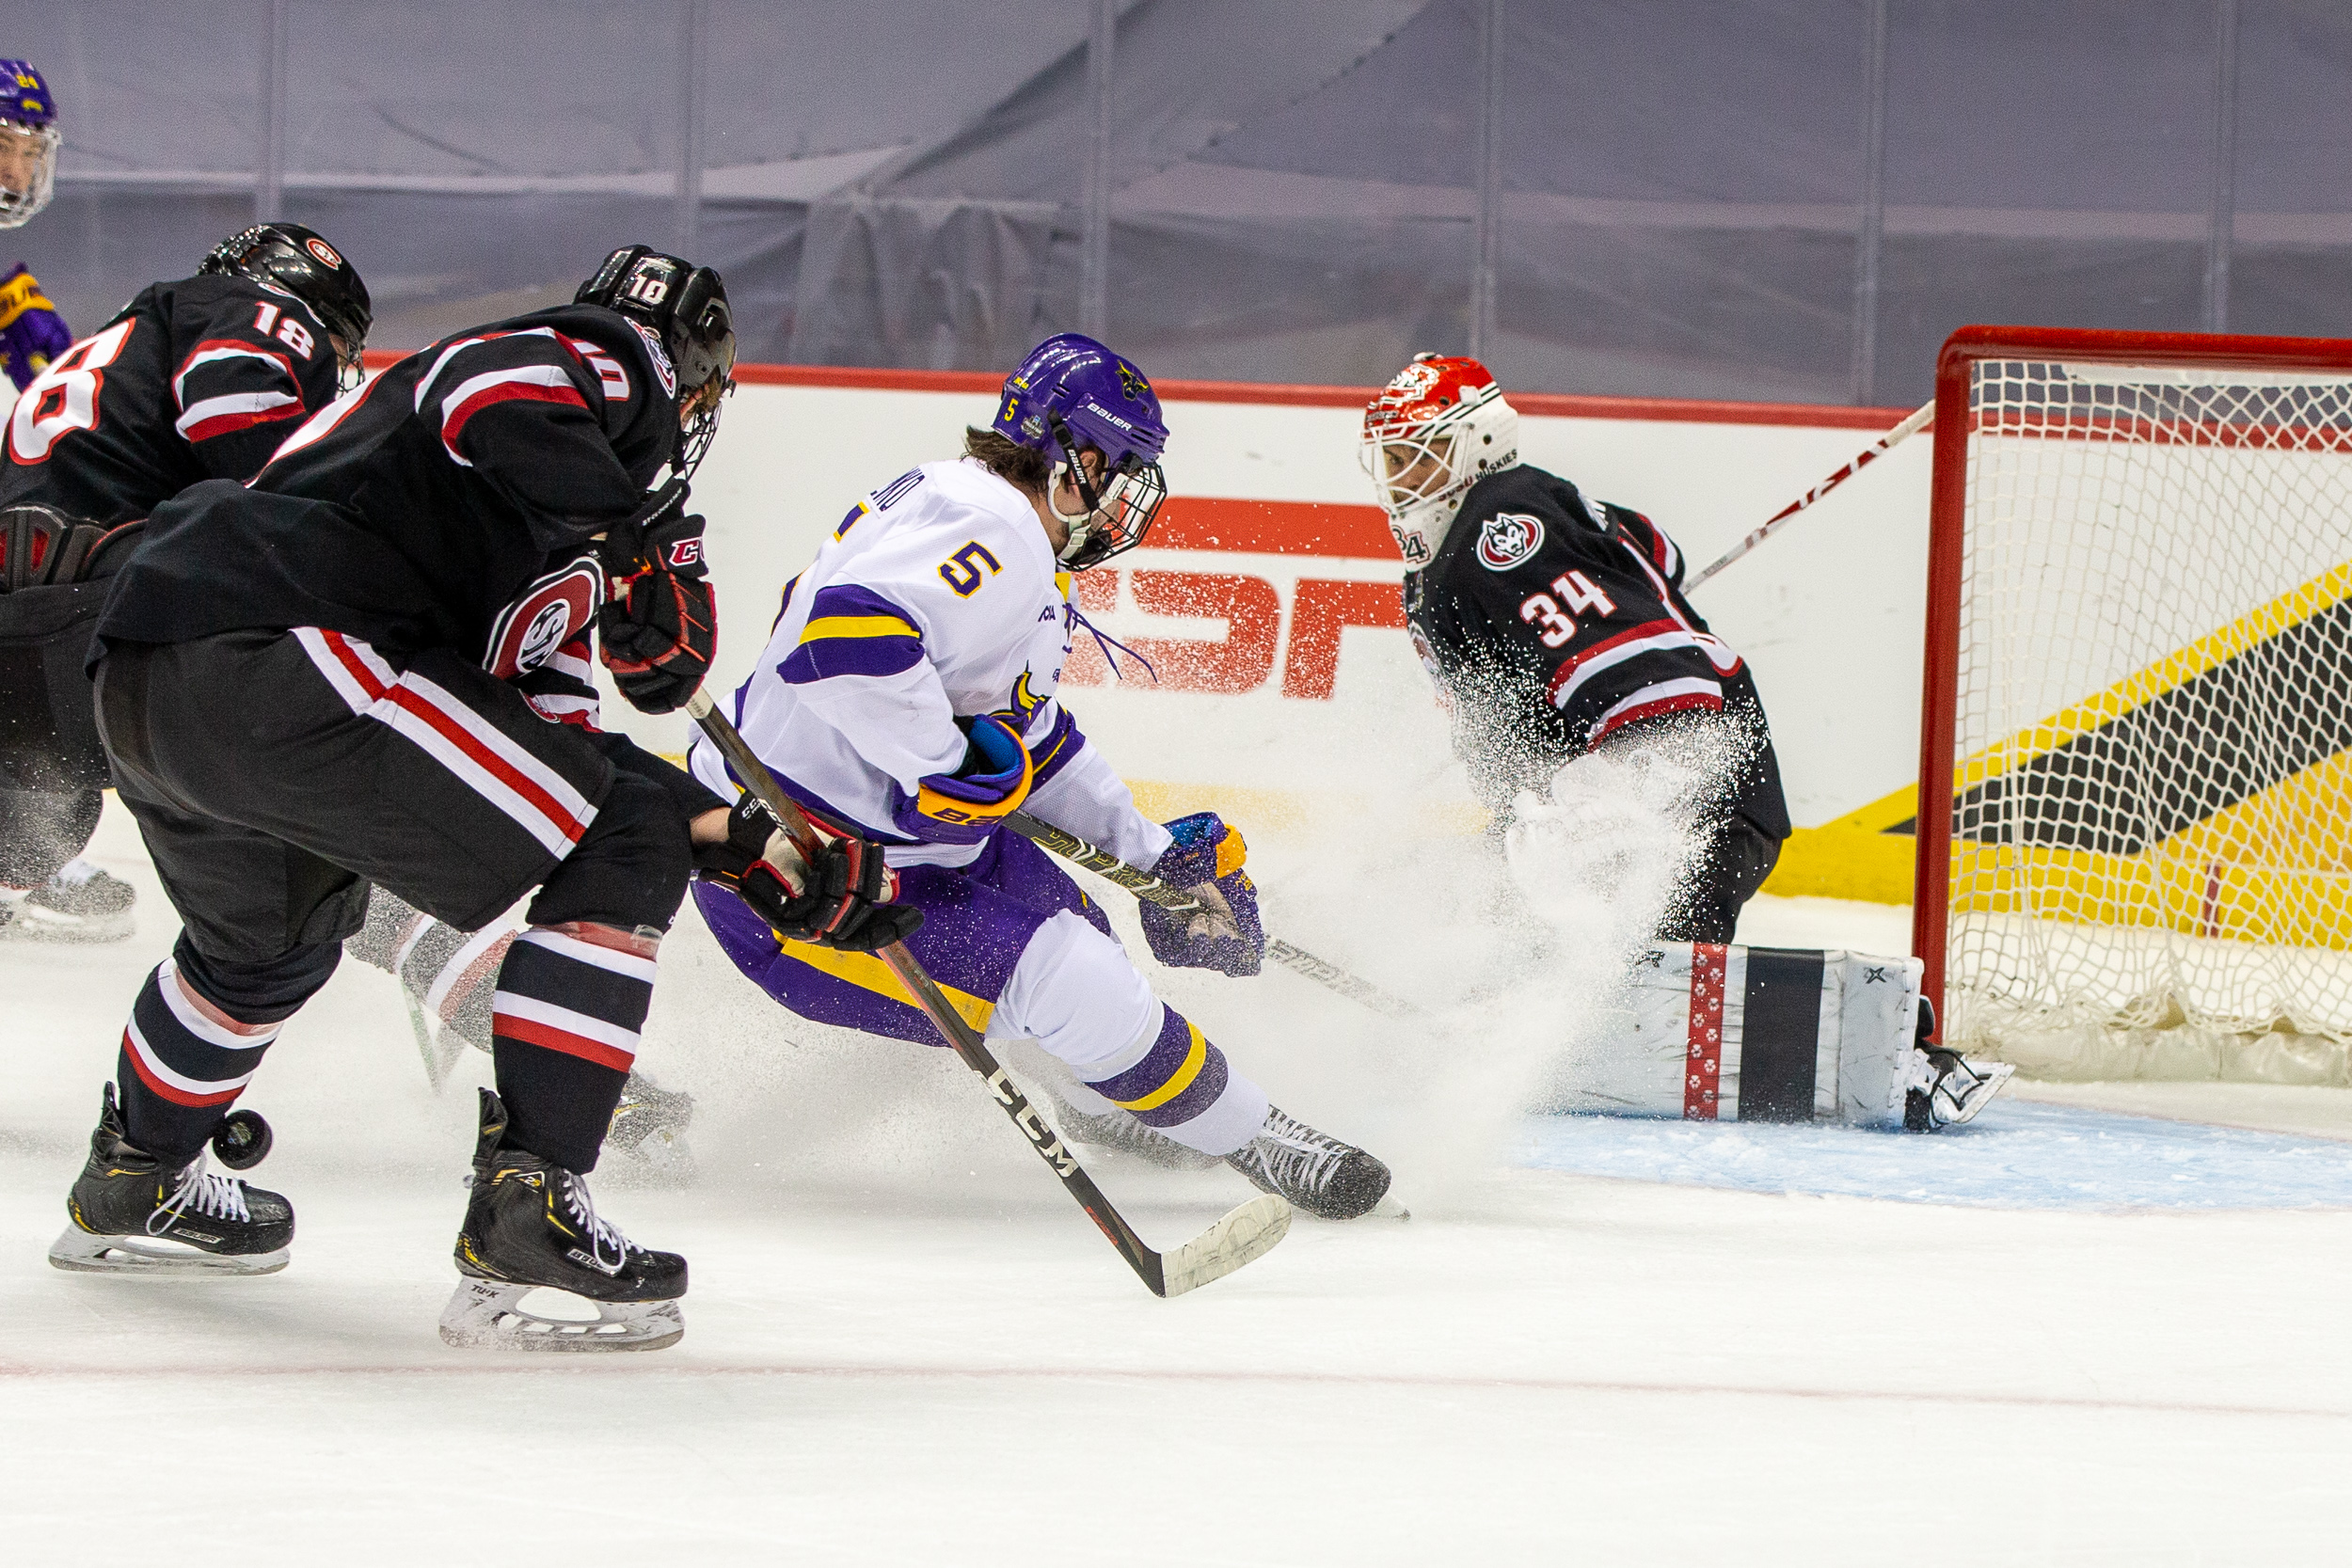 Minnesota State goalie Dryden McKay carries familiar hockey name